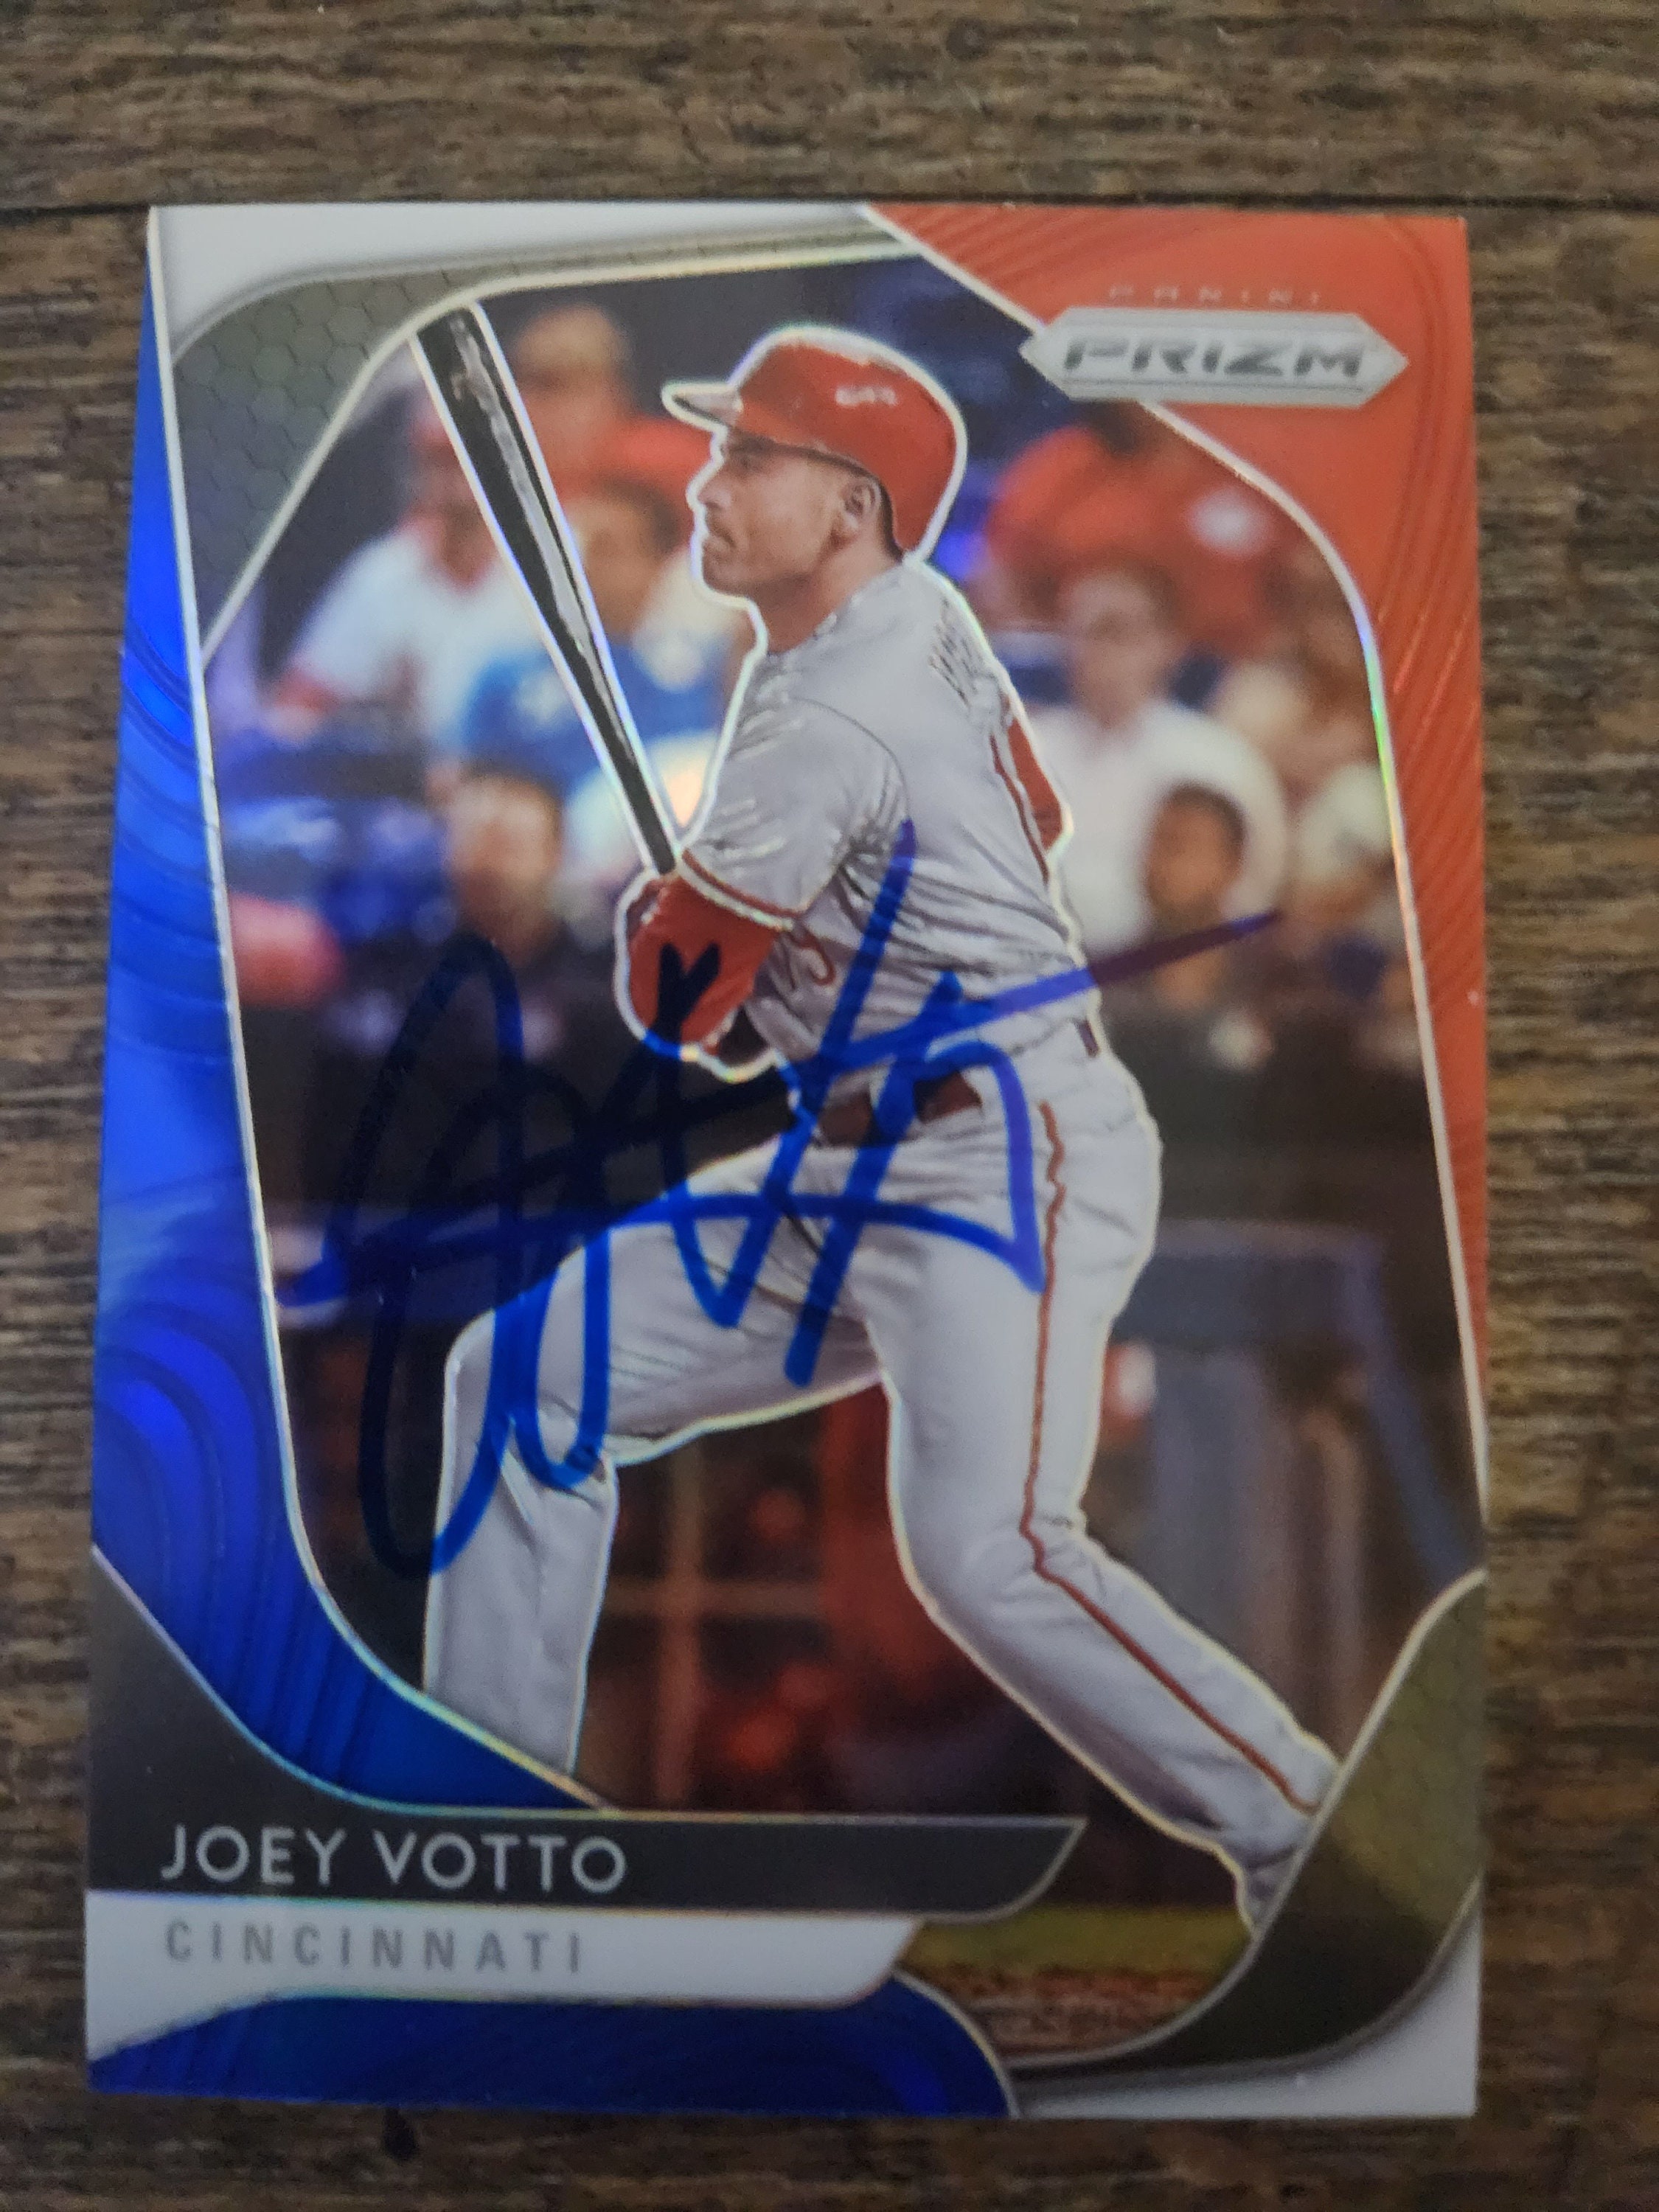 Joey Votto Autographed Memorabilia  Signed Photo, Jersey, Collectibles &  Merchandise